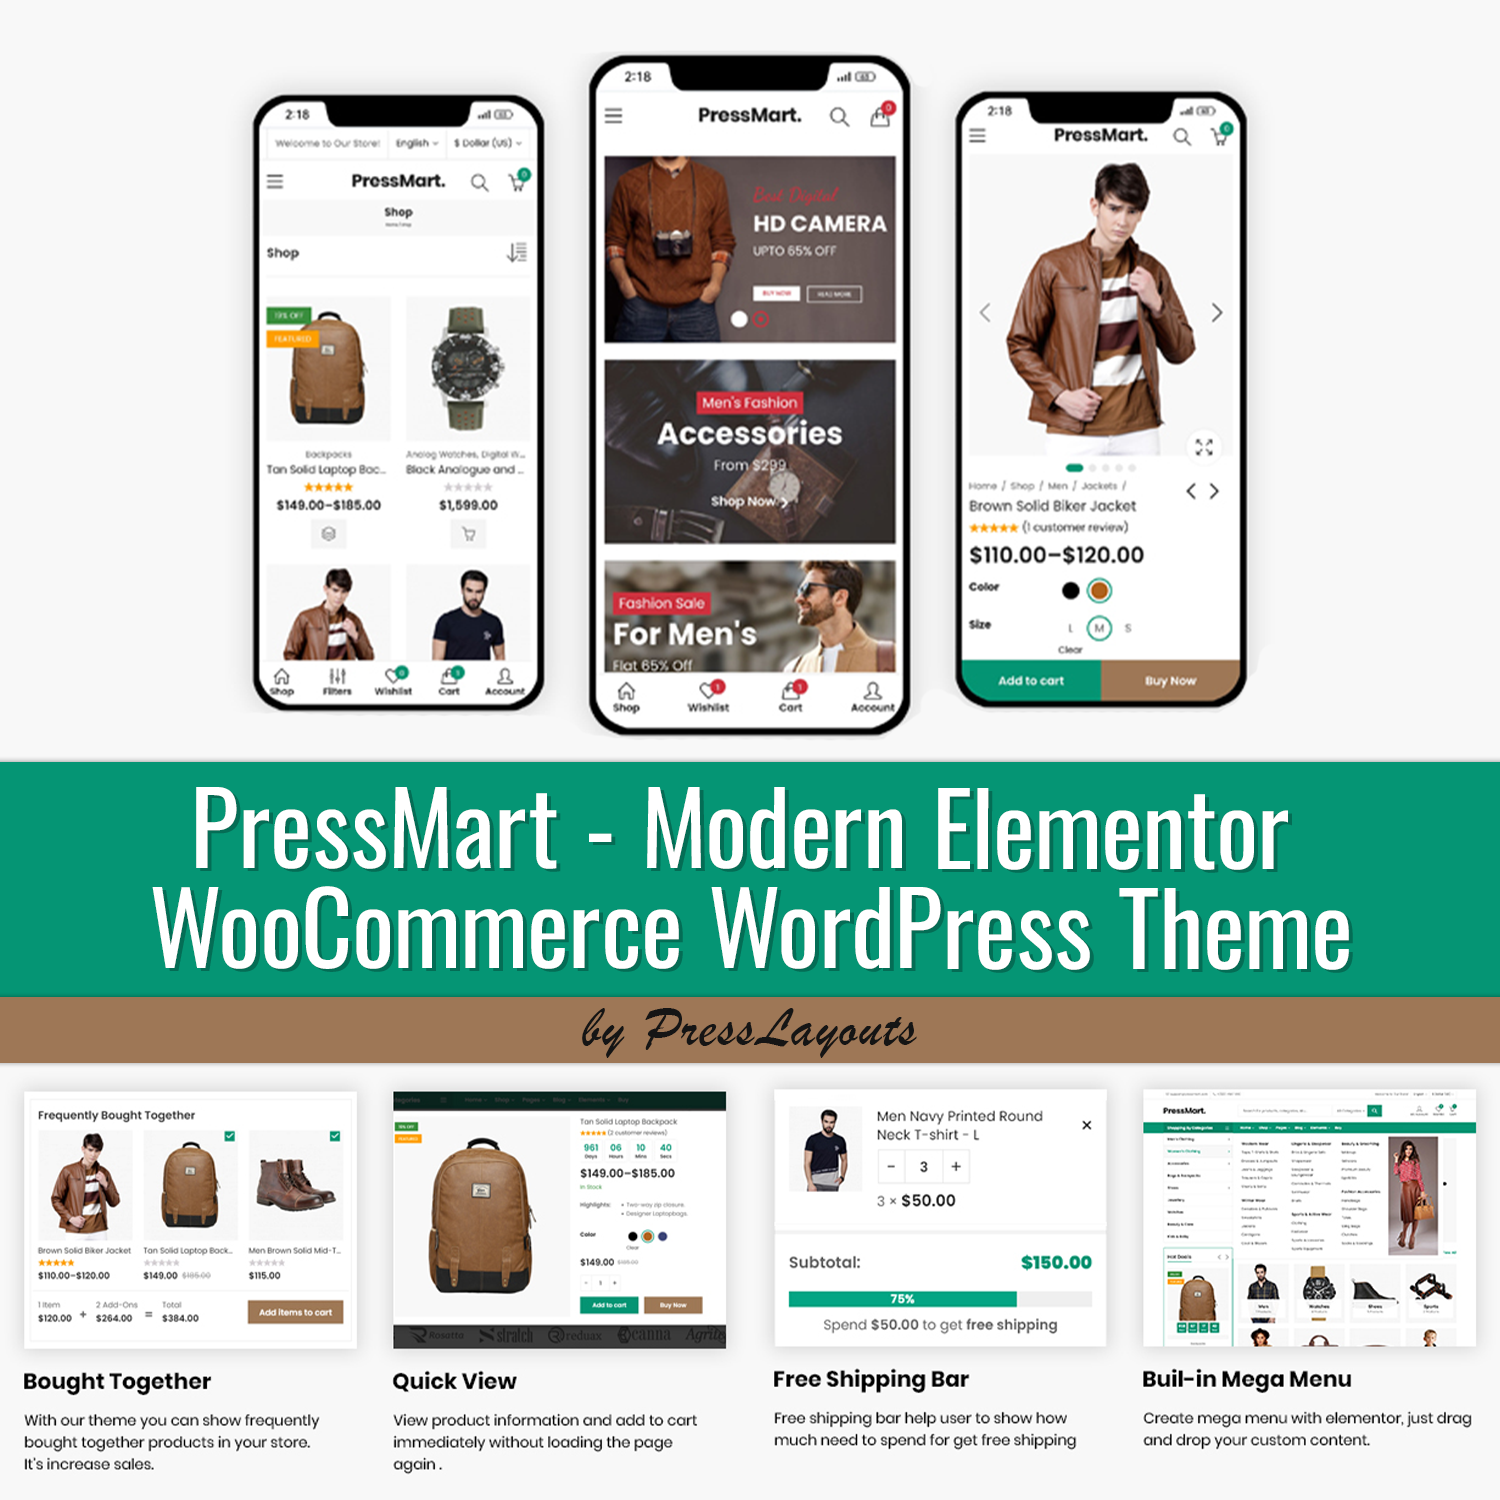 Preview pressmart modern elementor woocommerce wordpress theme.